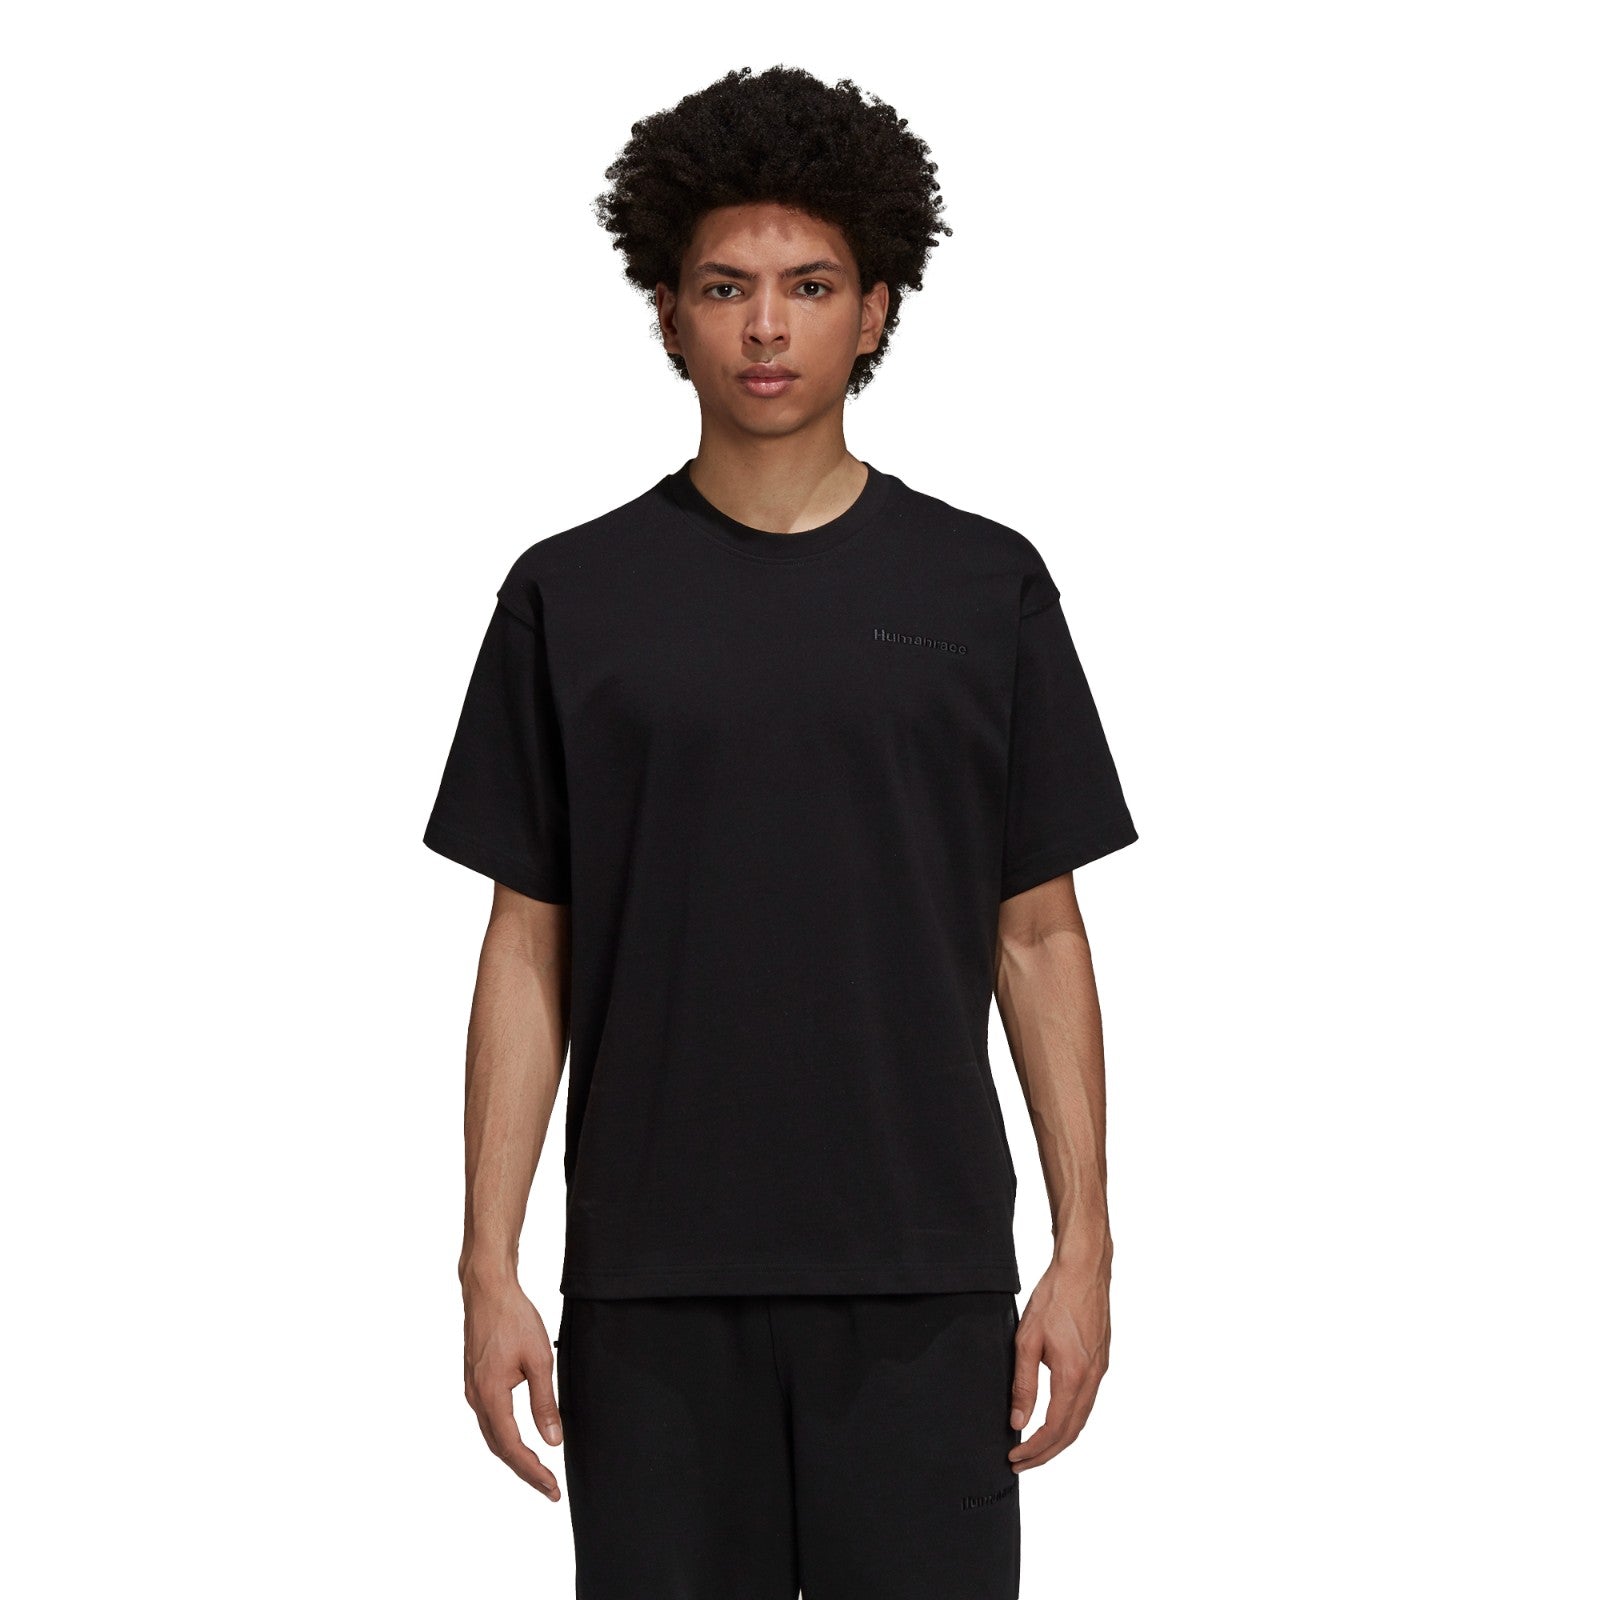 Adidas Pharrell Williams Basics Shirt HB8817